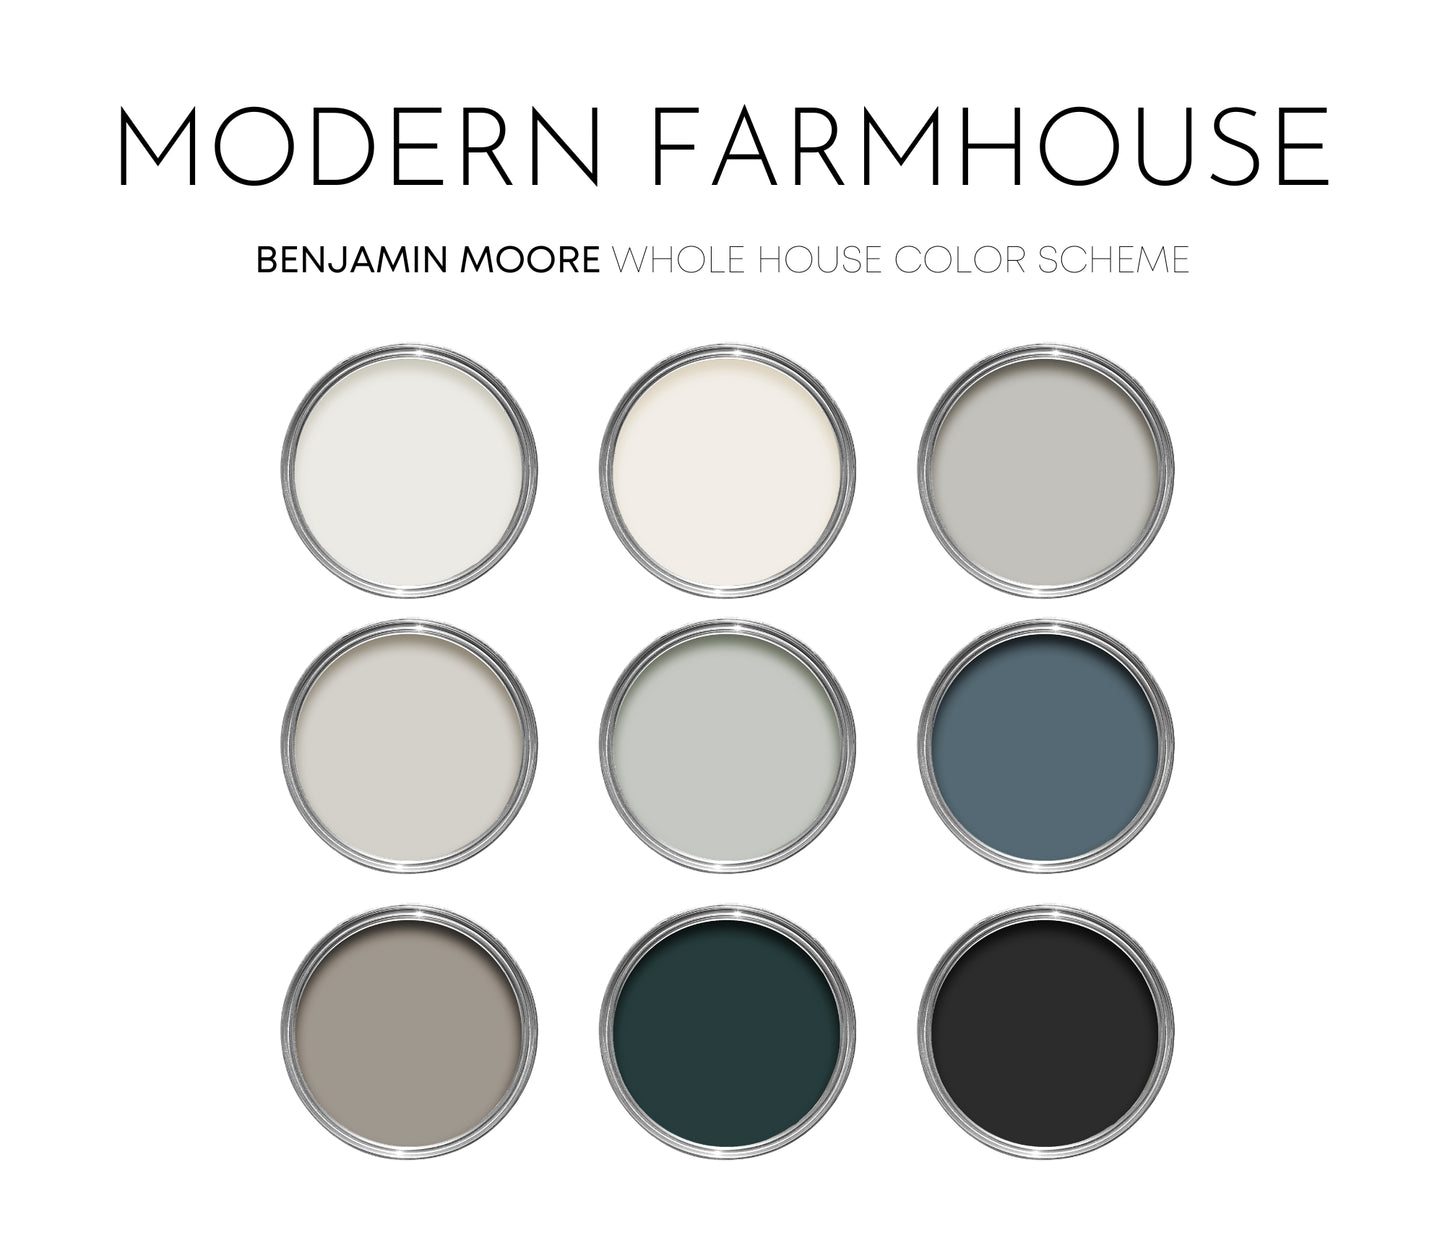 Modern Farmhouse Benjamin Moore Paint Palette, Neutral Interior Paint Colors, Modern Farmhouse Color Scheme, Swiss Coffee